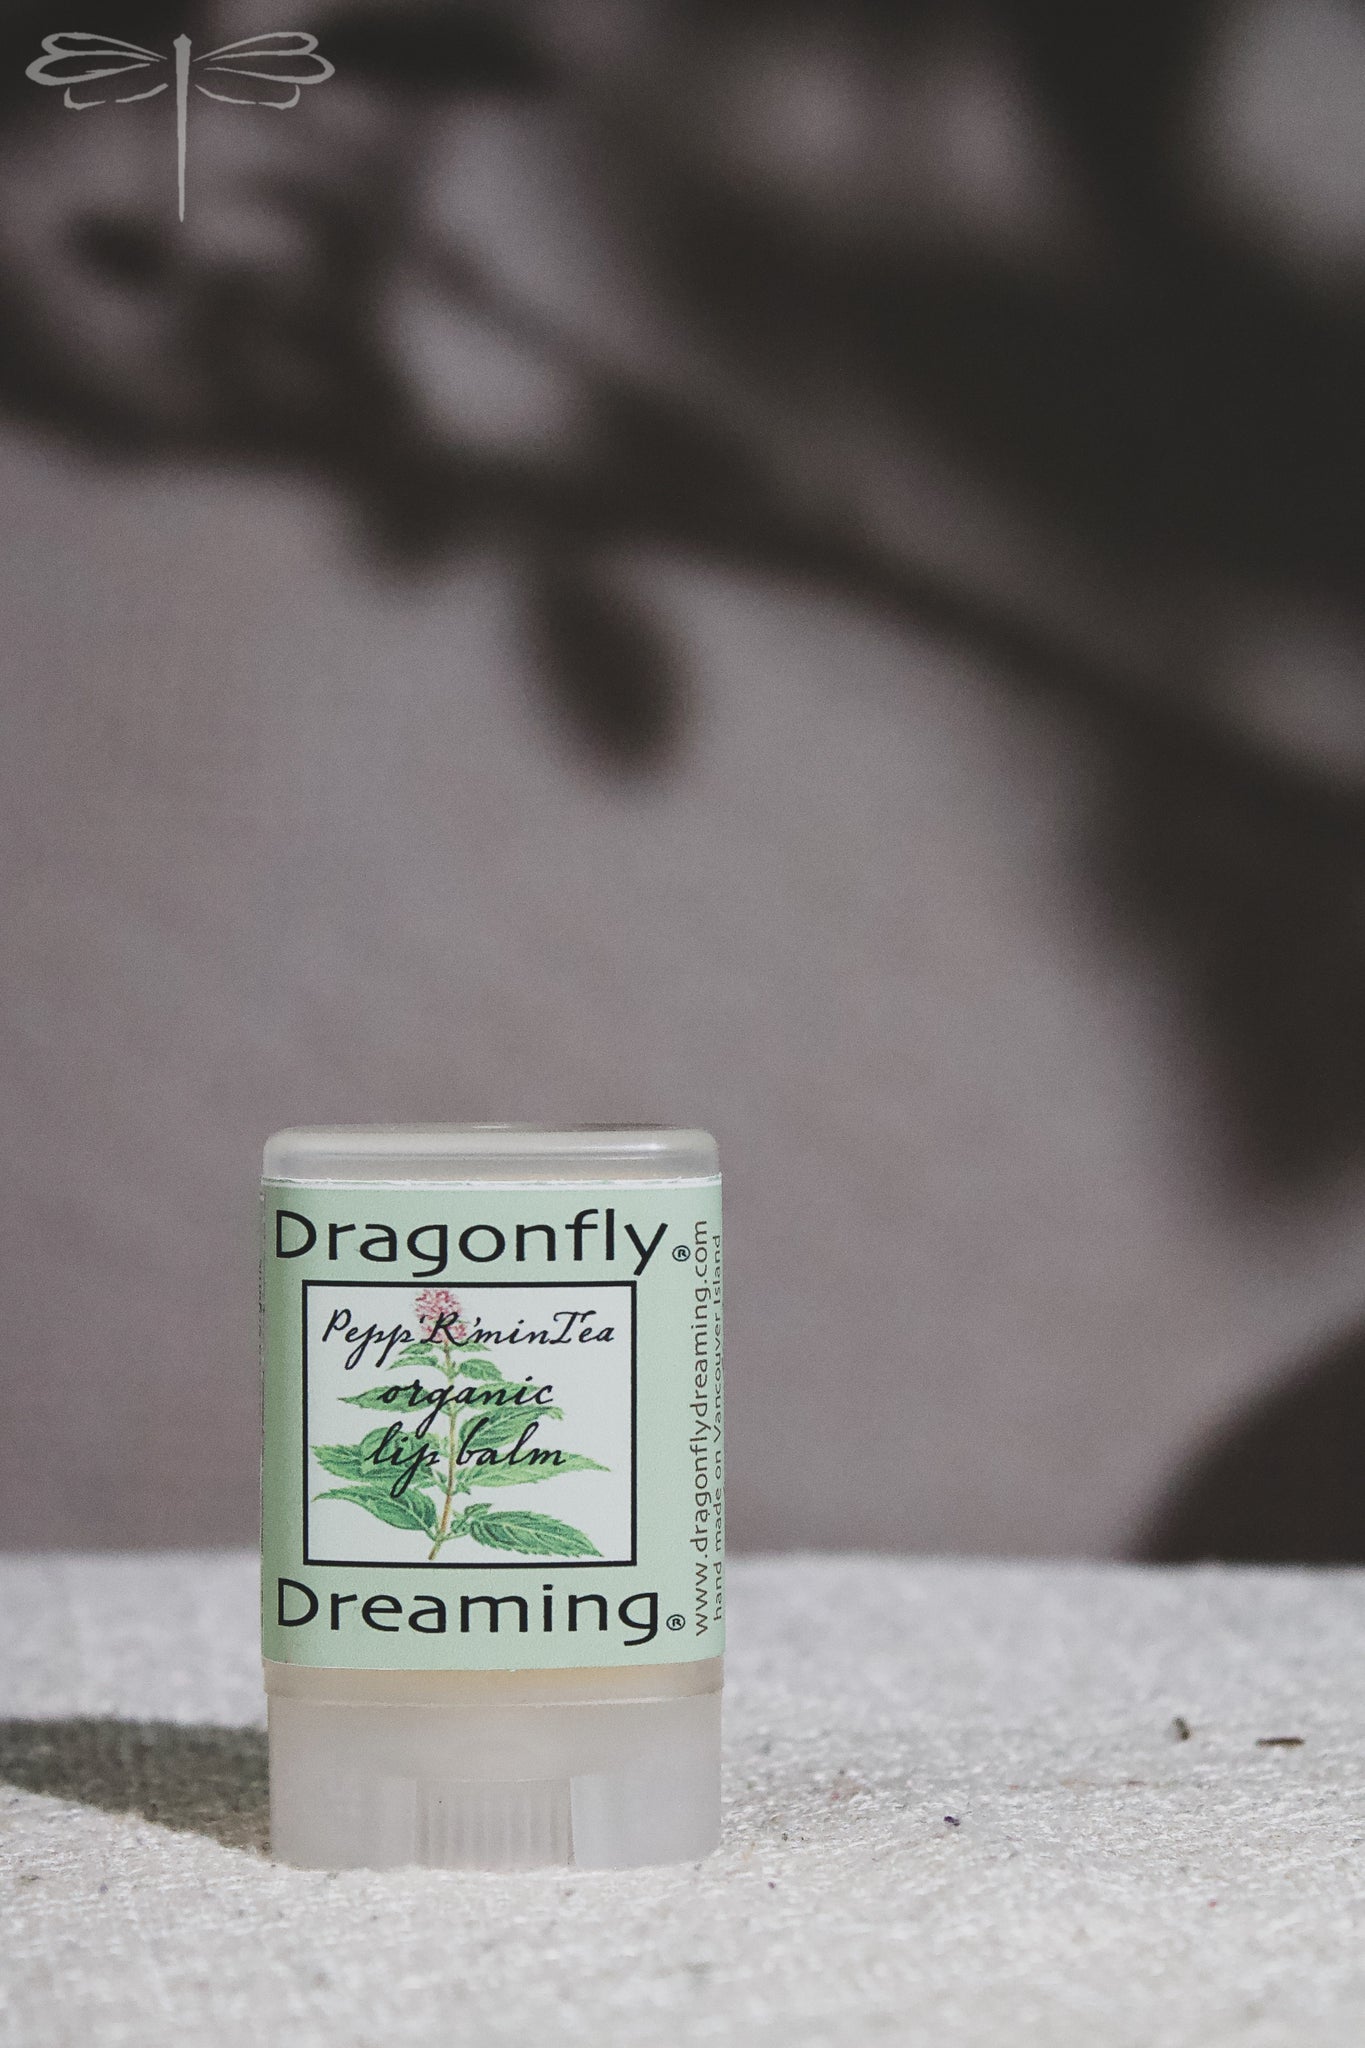 Pepp'R'MinTea Organic Lip Balm by Dragonfly Dreaming Organics